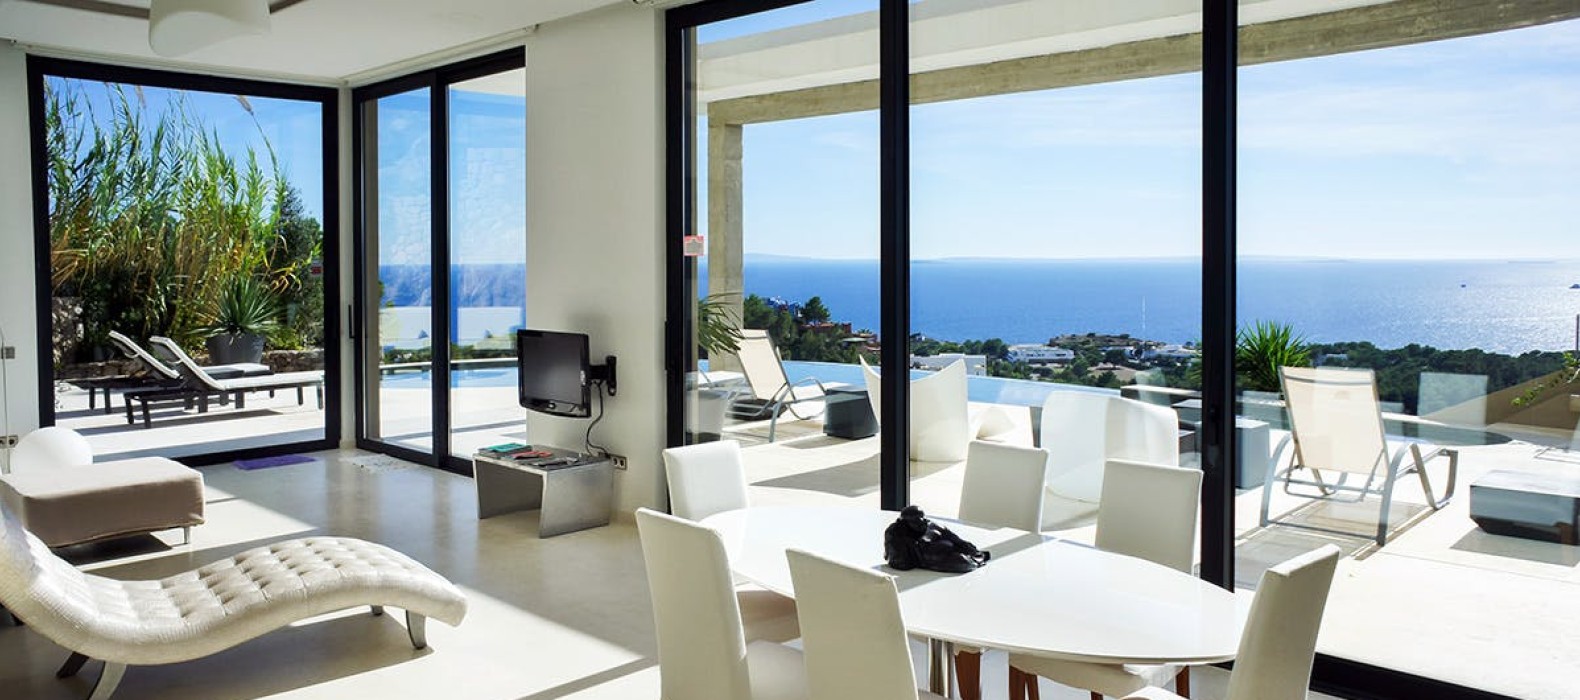 Living room of Casa Savant in Ibiza